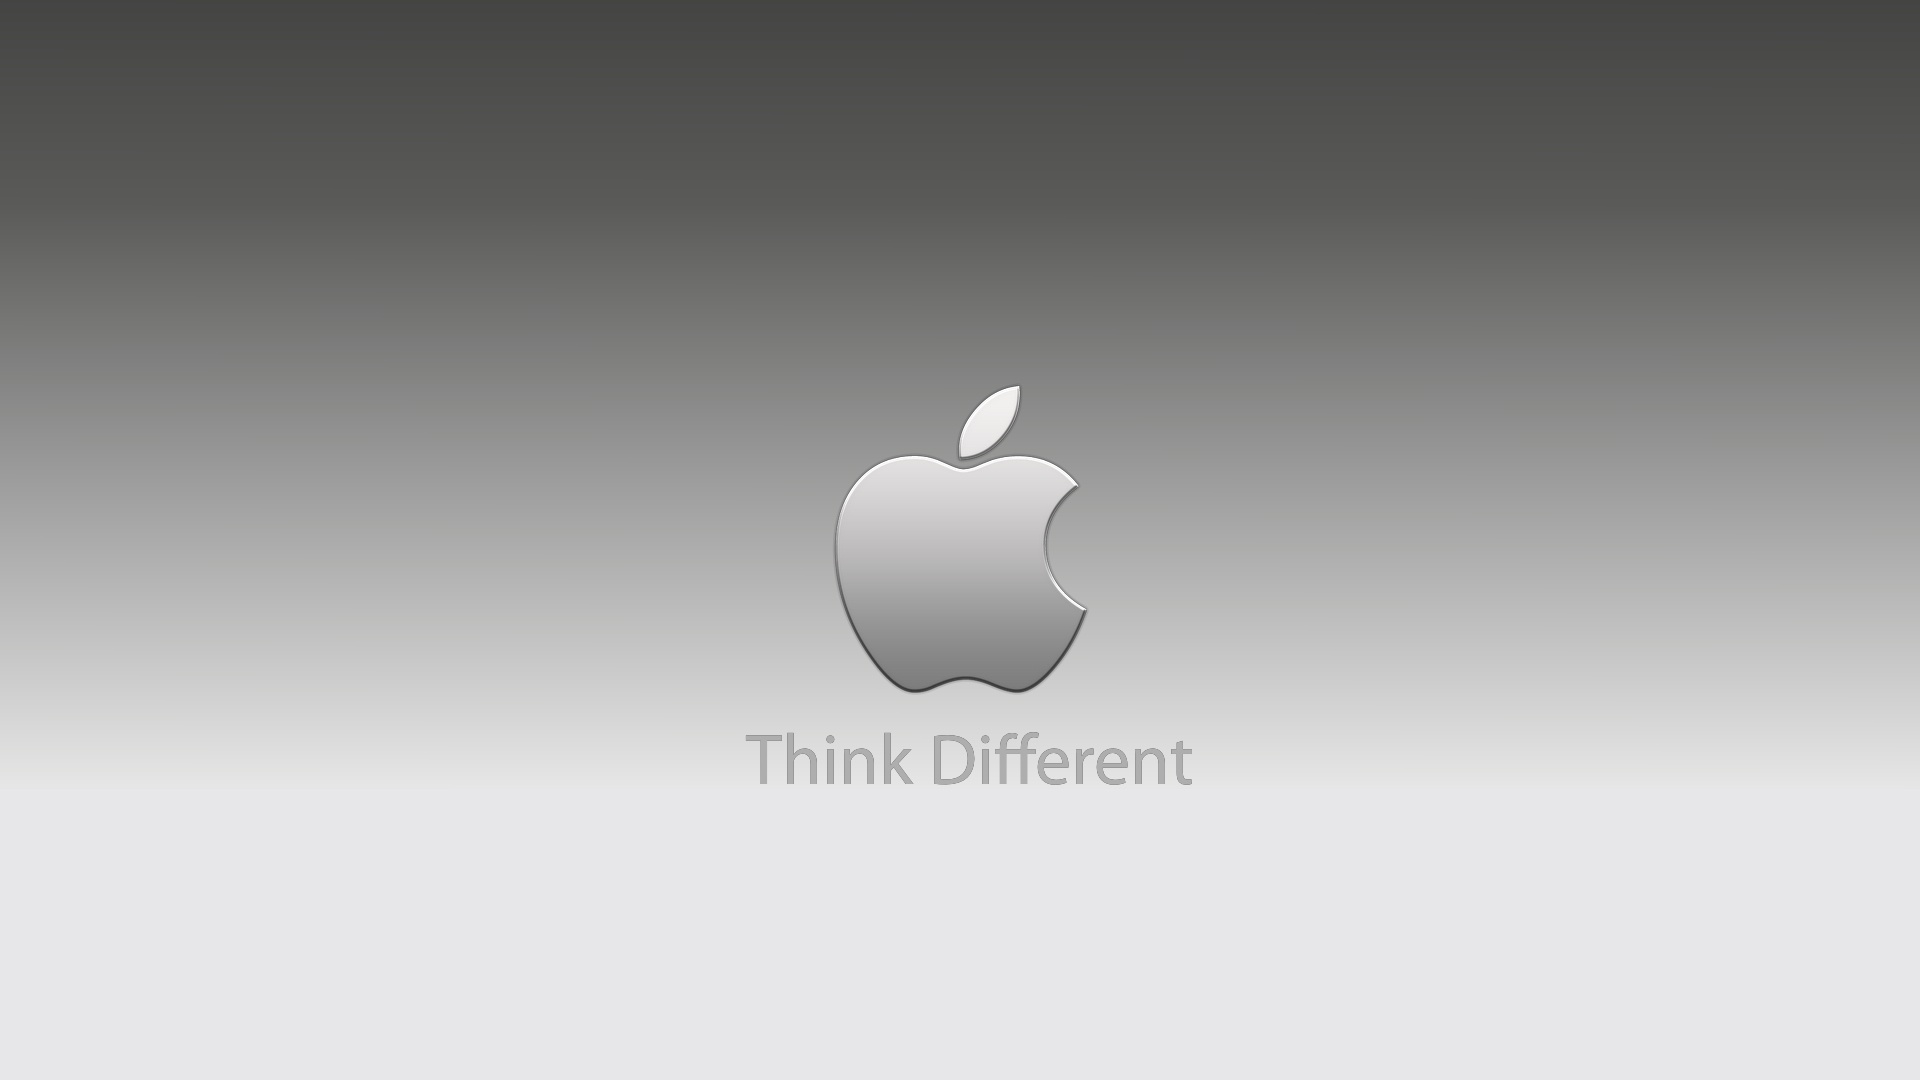 Think Different Apple Mac Hd Desktop Wallpaper Apple 19x1080 Wallpaper Teahub Io